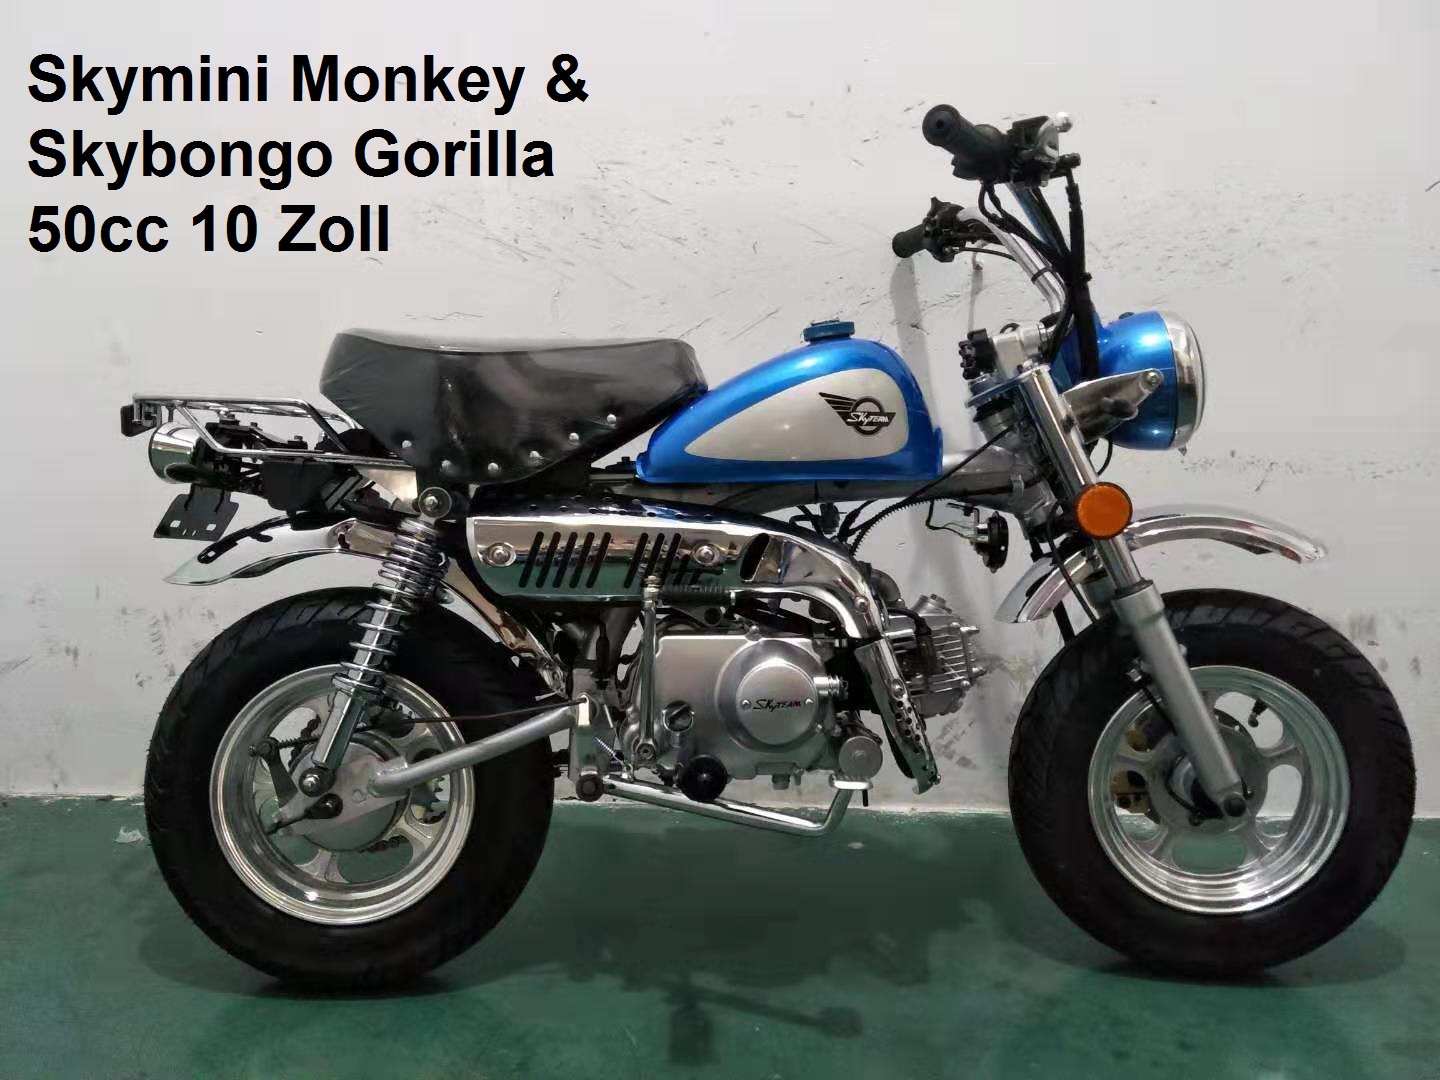 Skymini Monkey & Skybongo Gorilla 50cc 10 Zoll